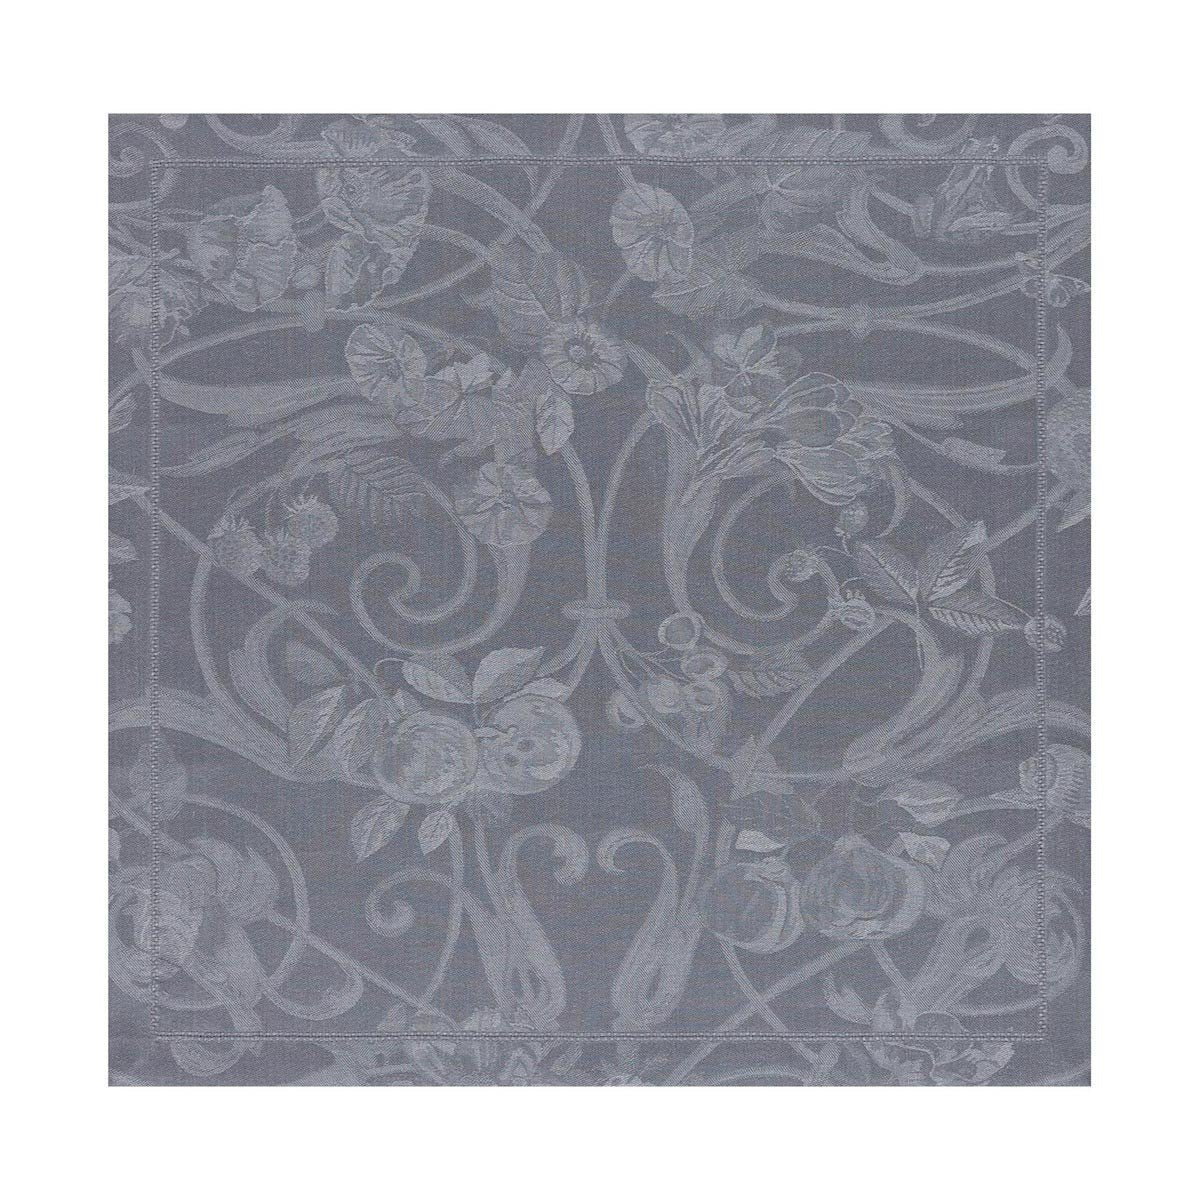 Le Jacquard Français Table Linen Tivoli in Flannel Fig Linens grey napkin